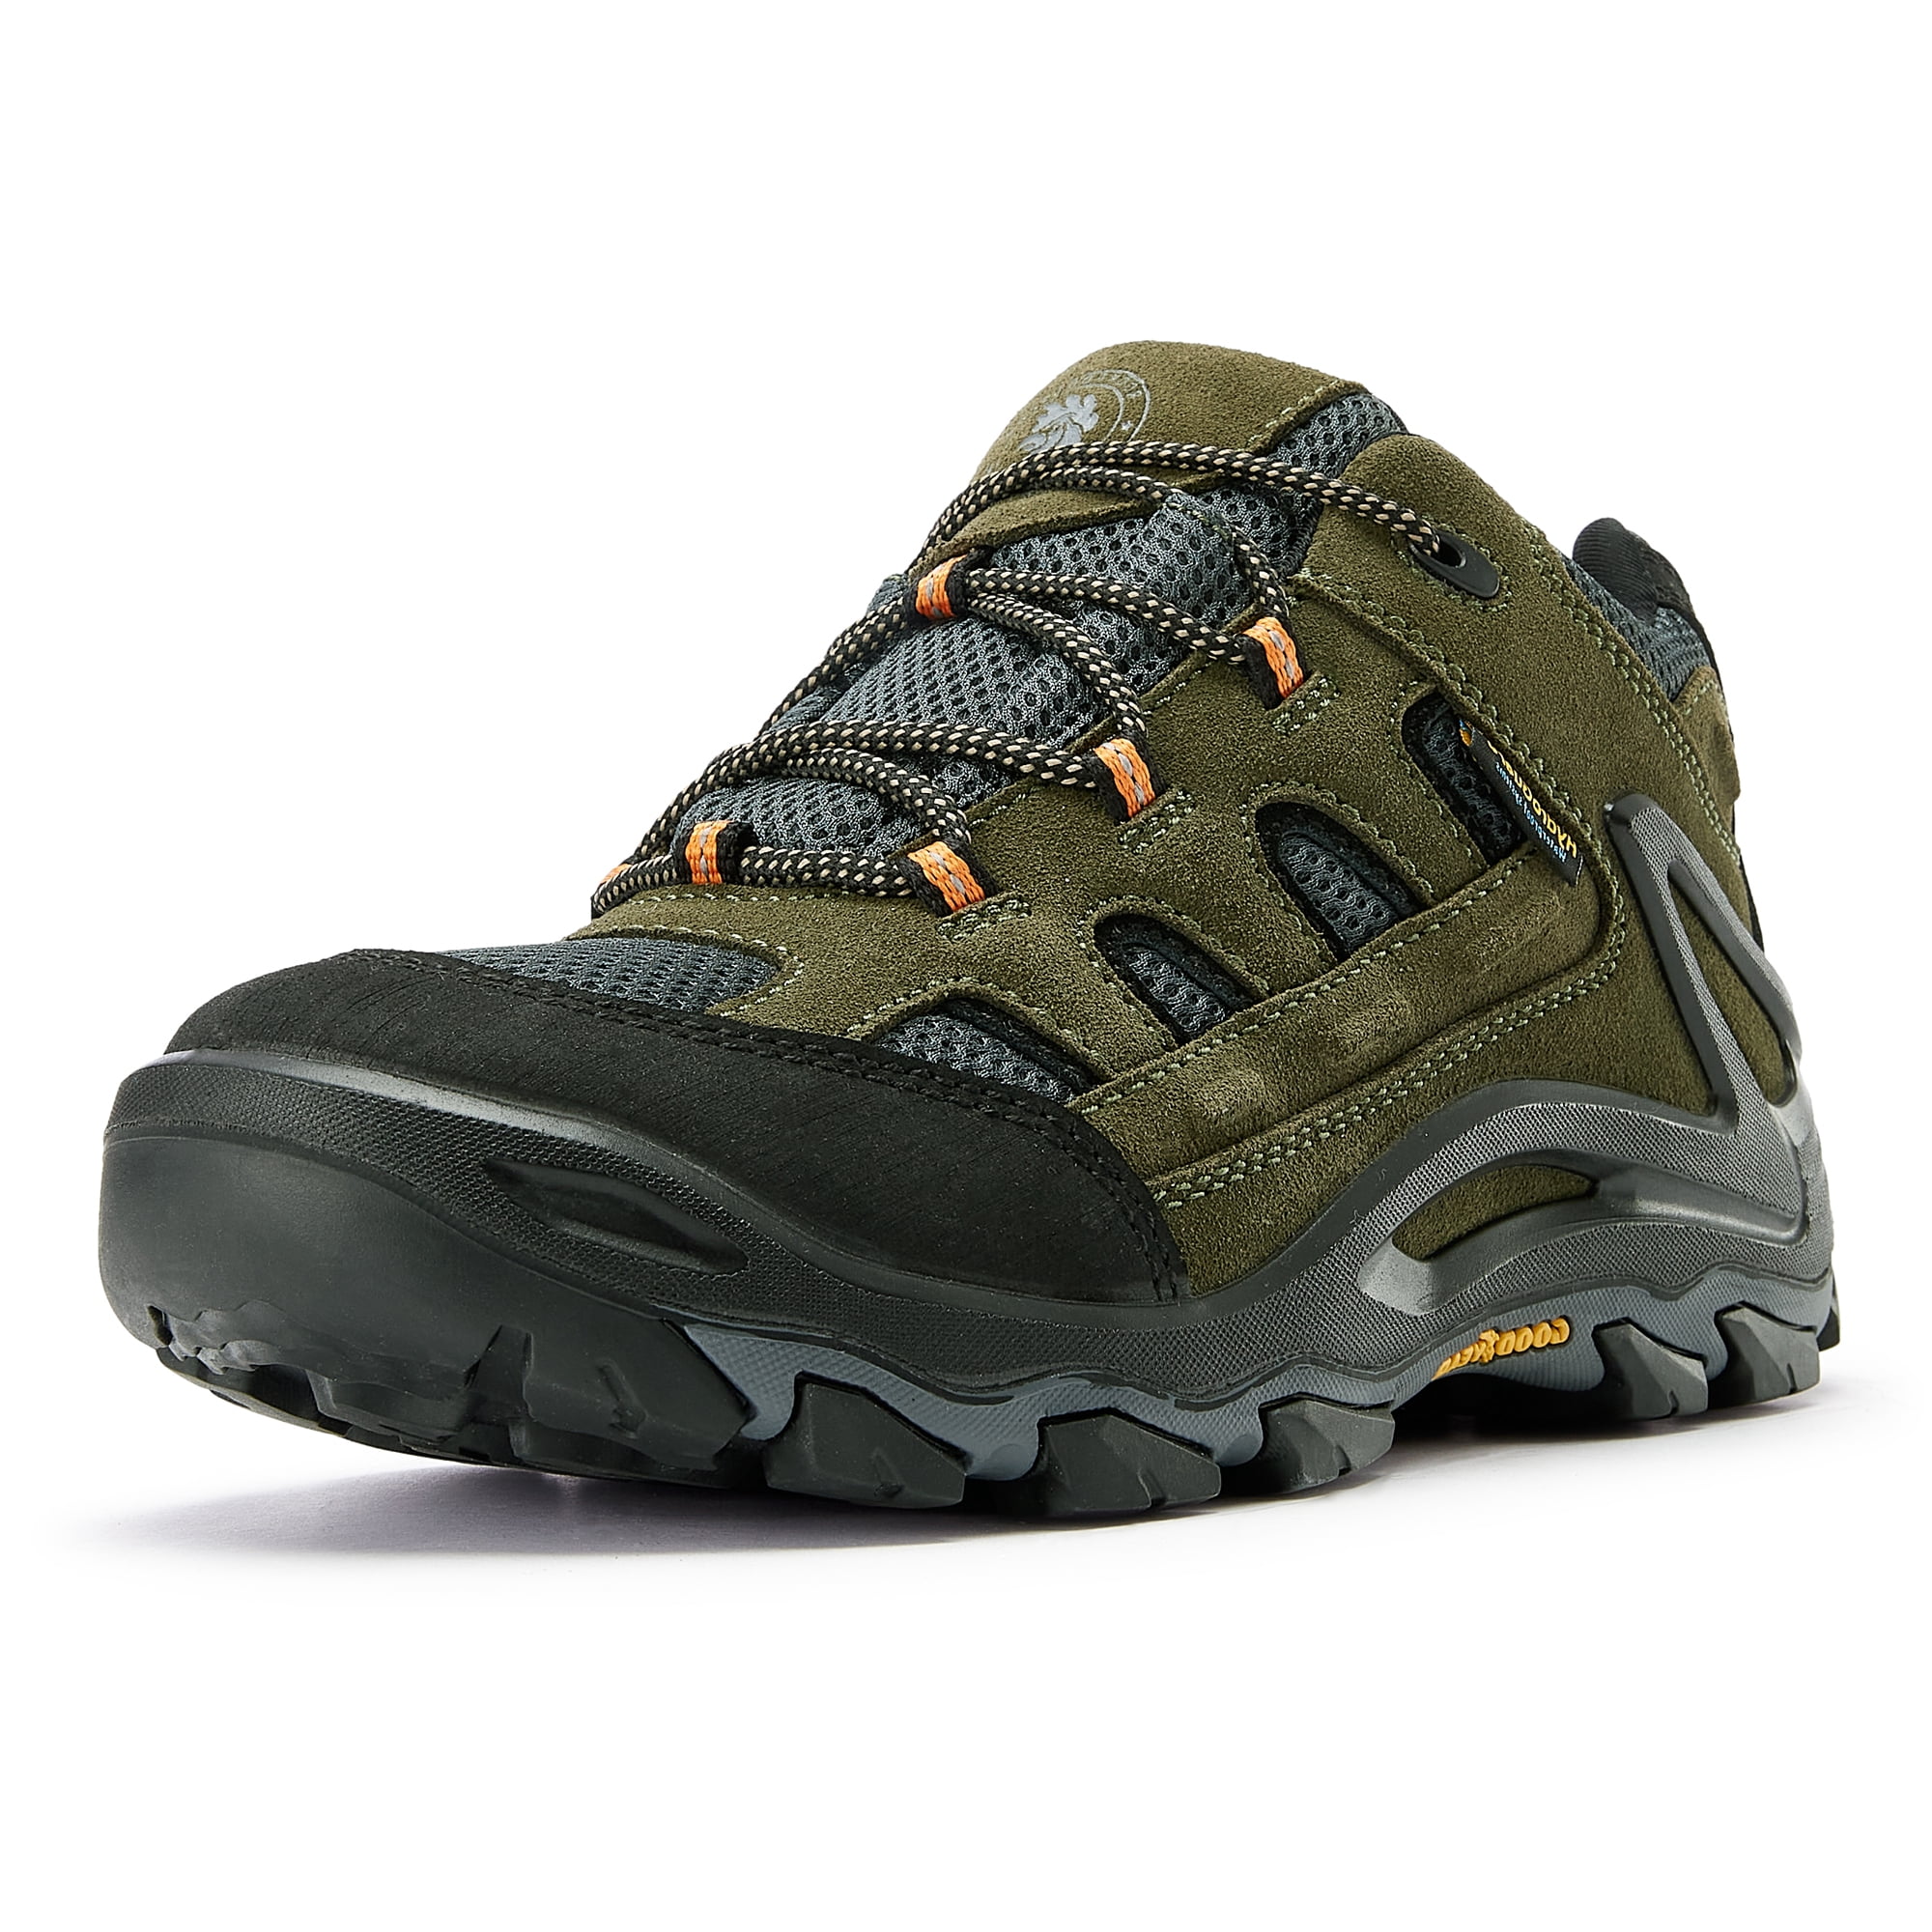 Merrell Moab 2 Ventilator Mid Walnut Hiking Shoe Men's sizes 7-15/NEW!!! 